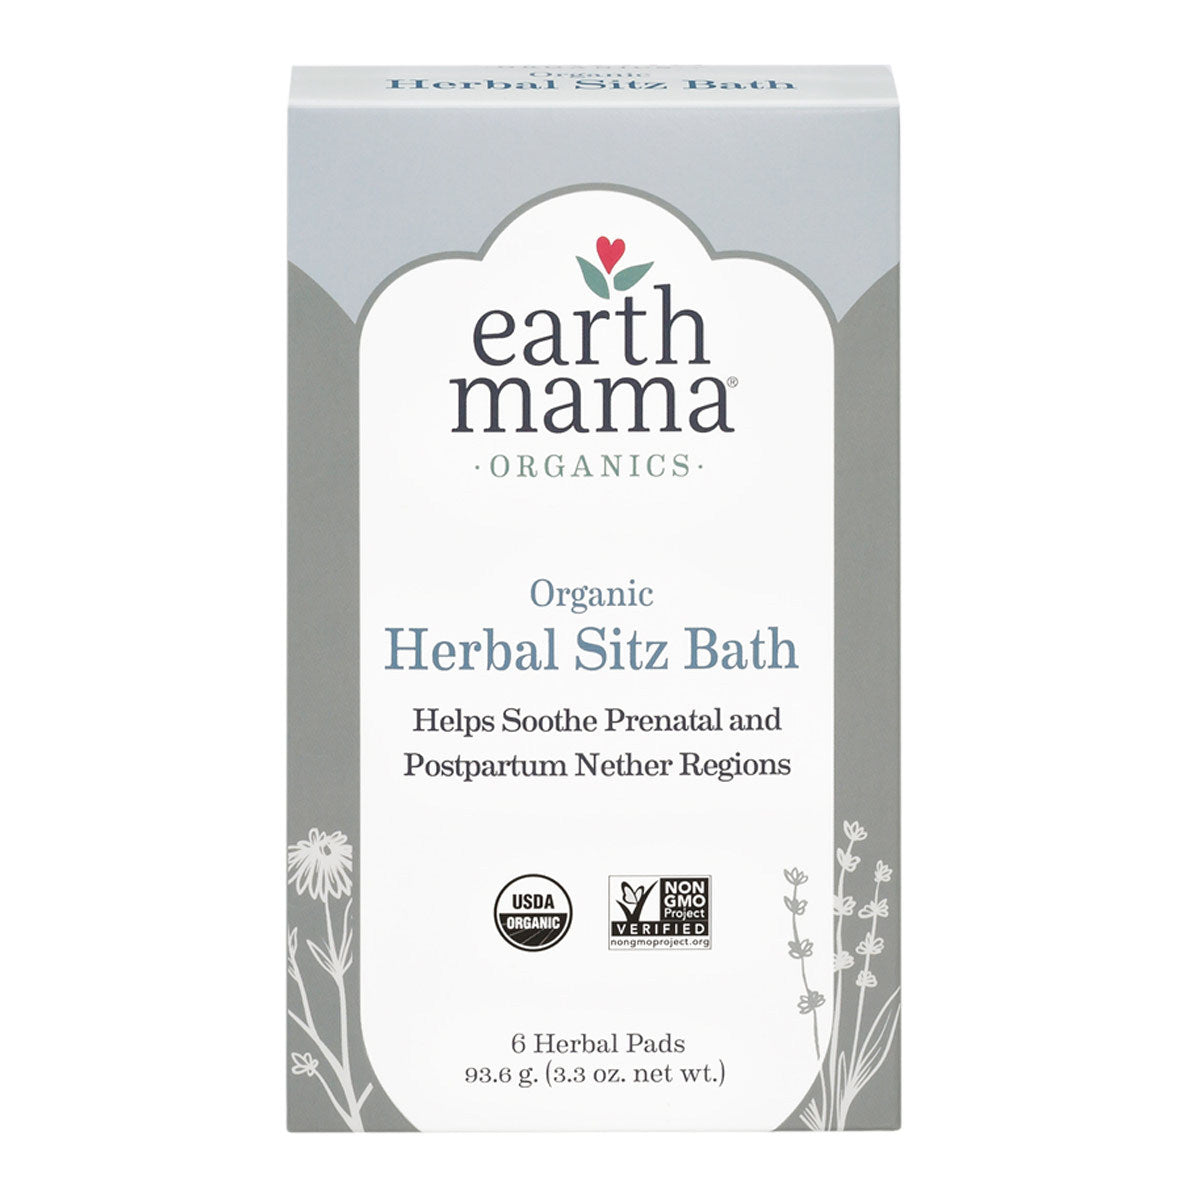 Primary image of Organic Herbal Sitz Bath